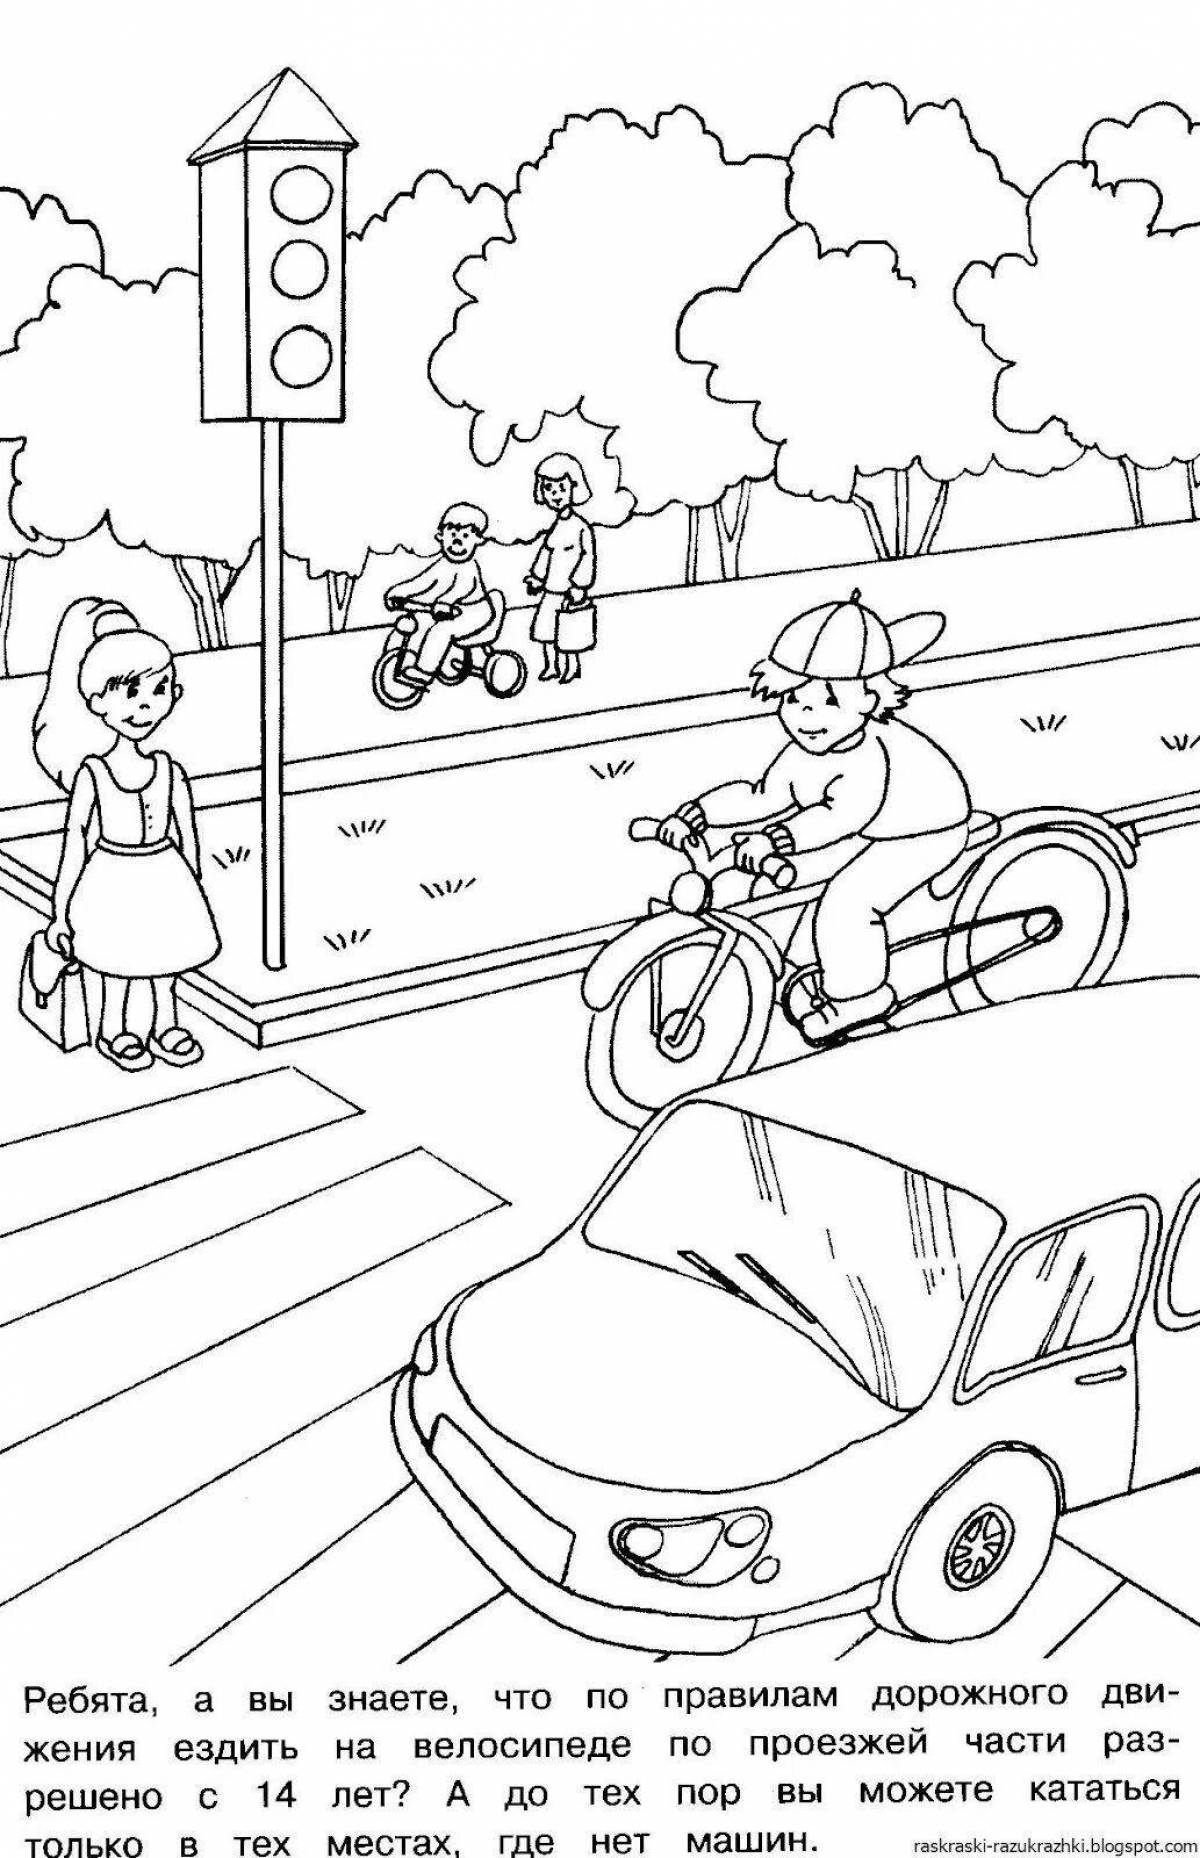 Fun crosswalk coloring book for 6-7 year olds